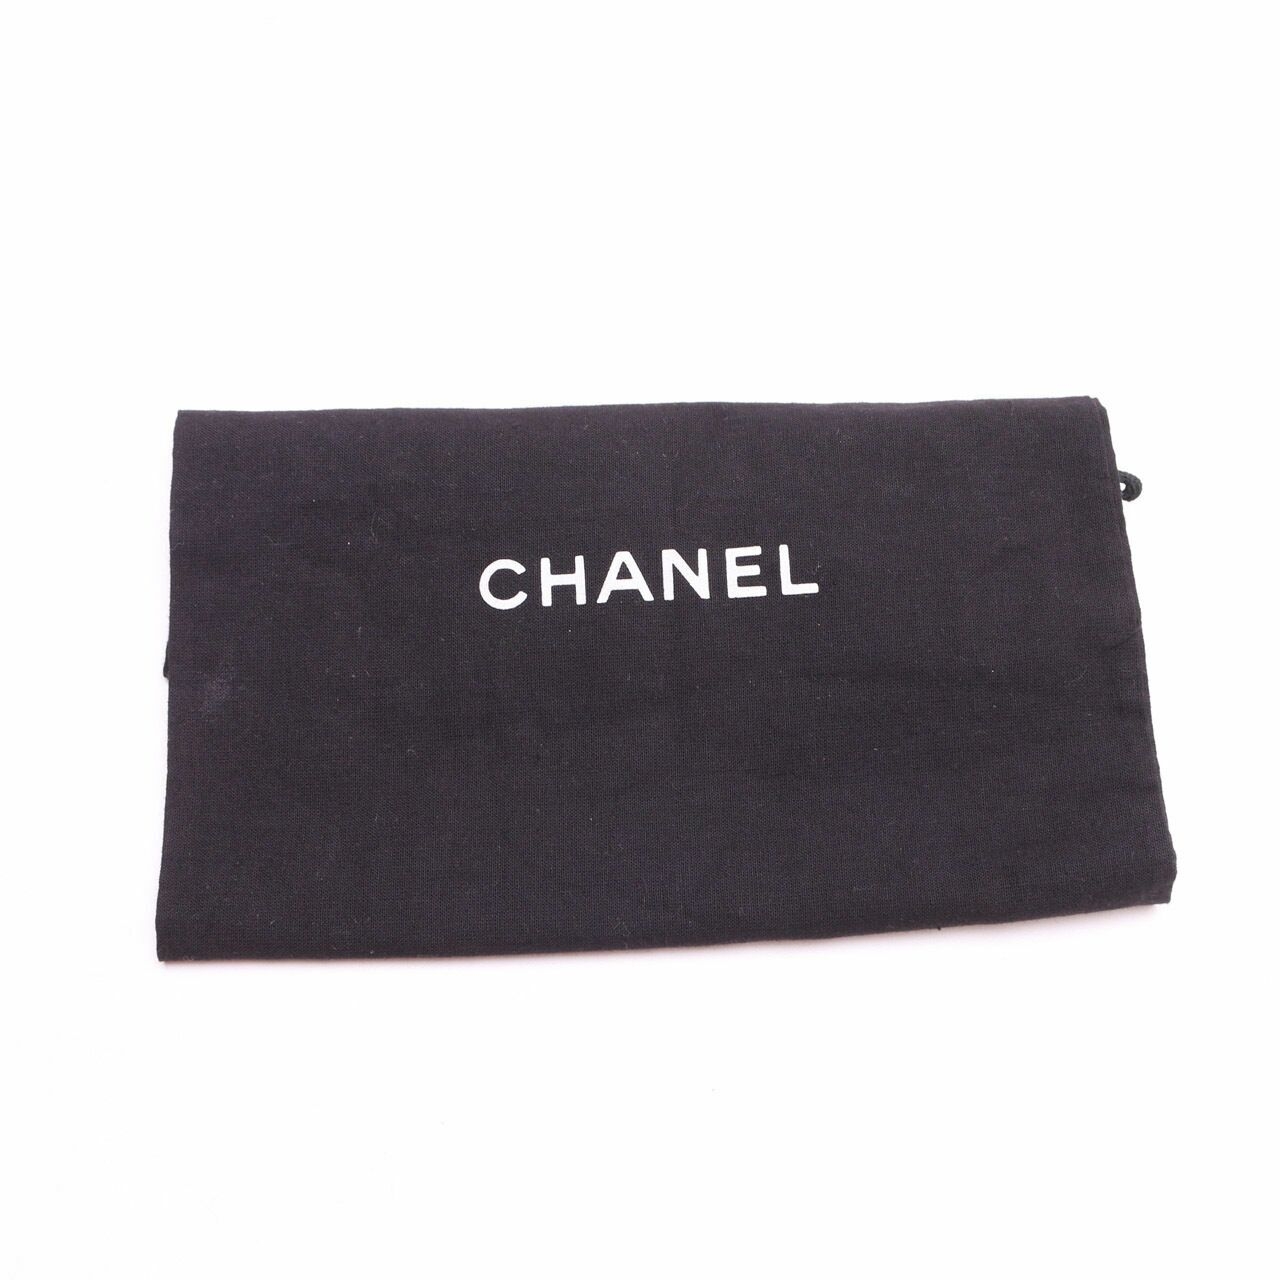 Chanel Purple Canvas Shoulder Bag